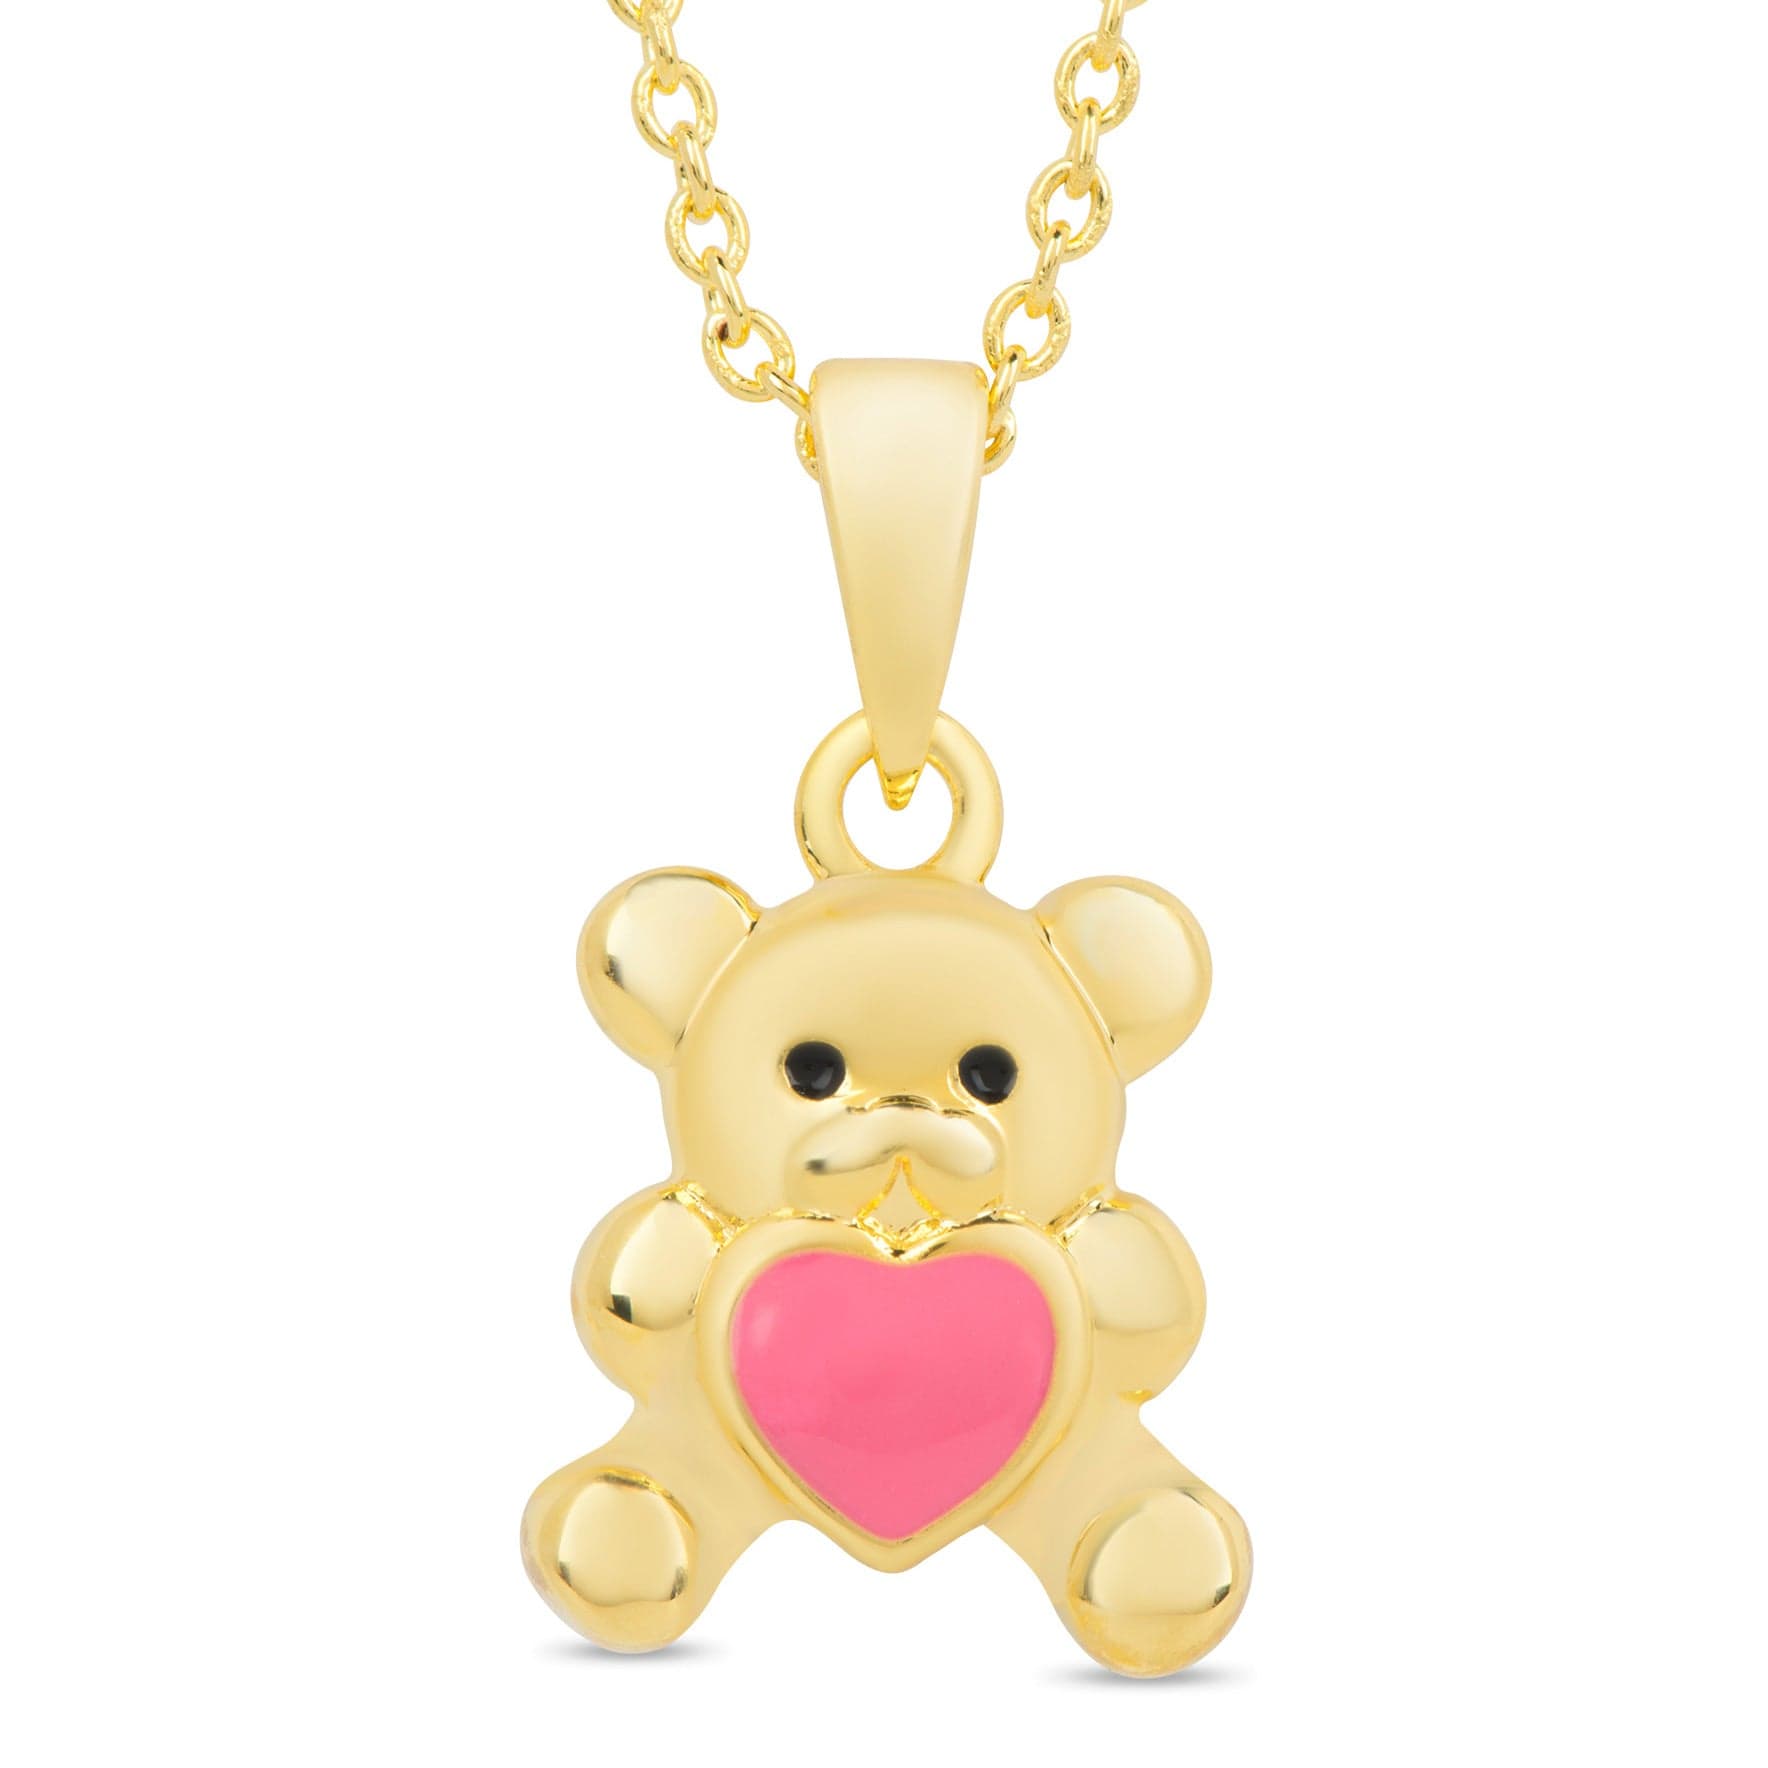 Teddy Bear Love Pendant